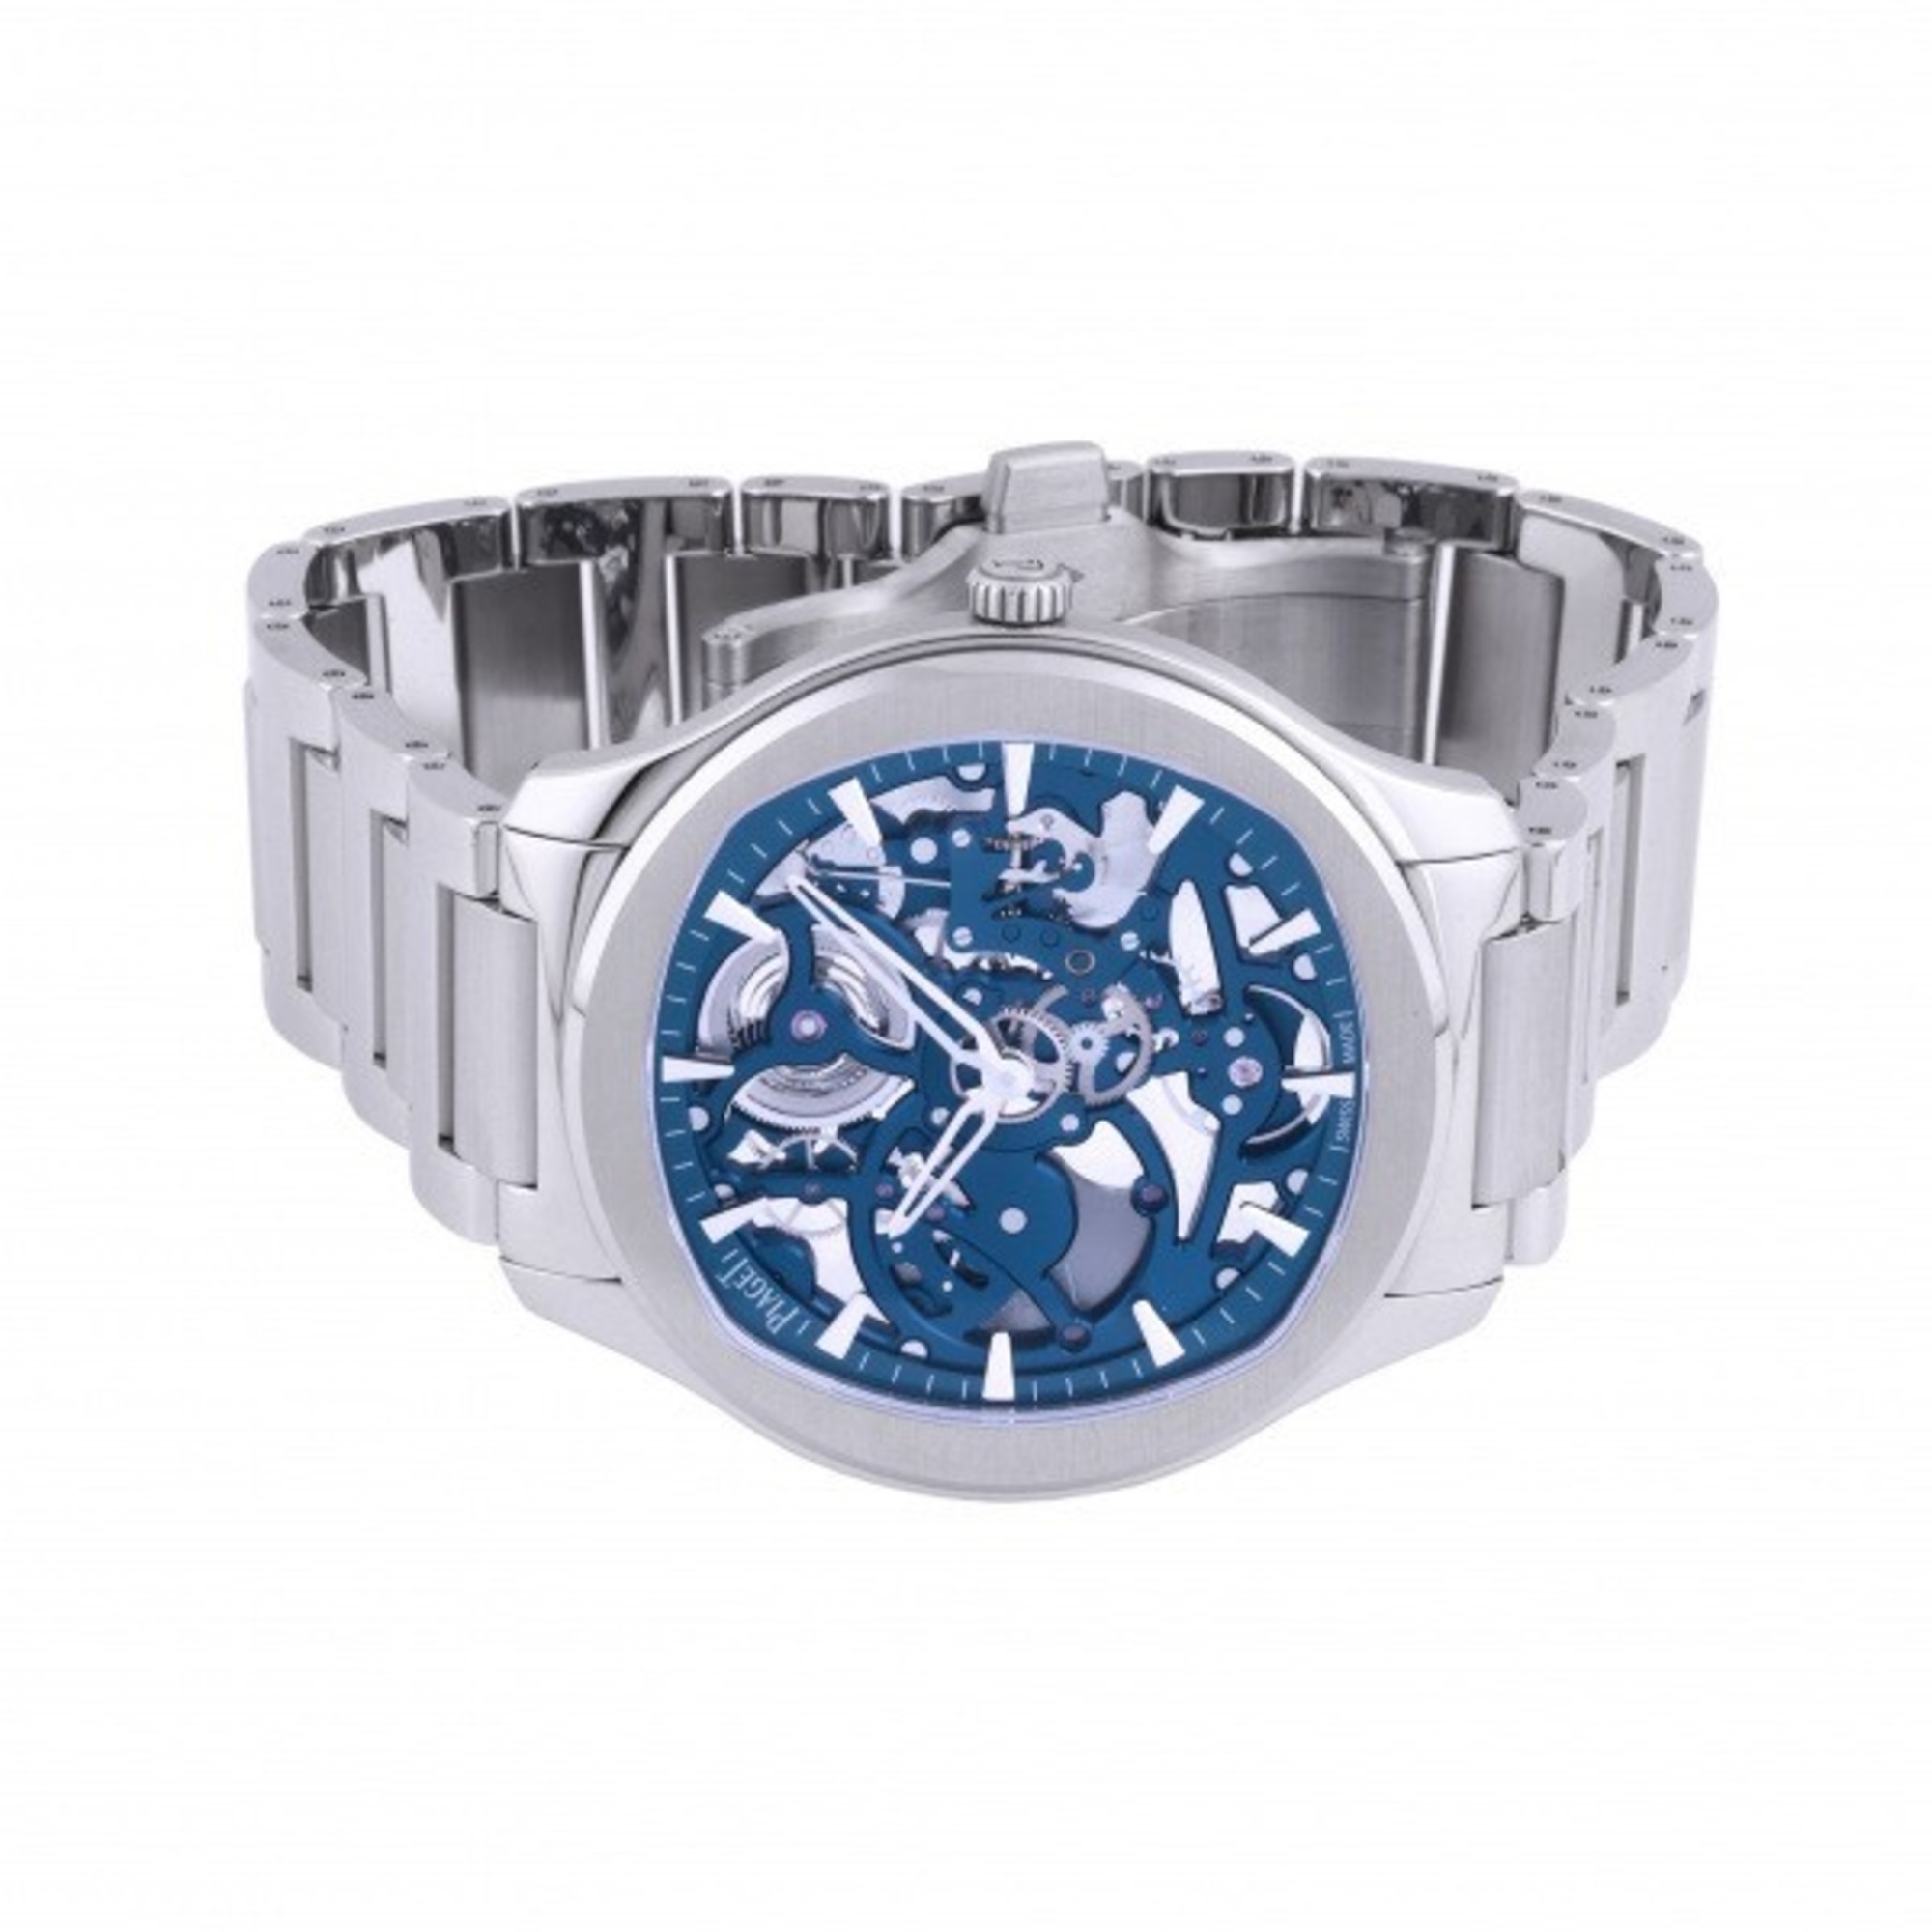 Piaget PIAGET Polo G0A45004 silver/blue dial watch men's